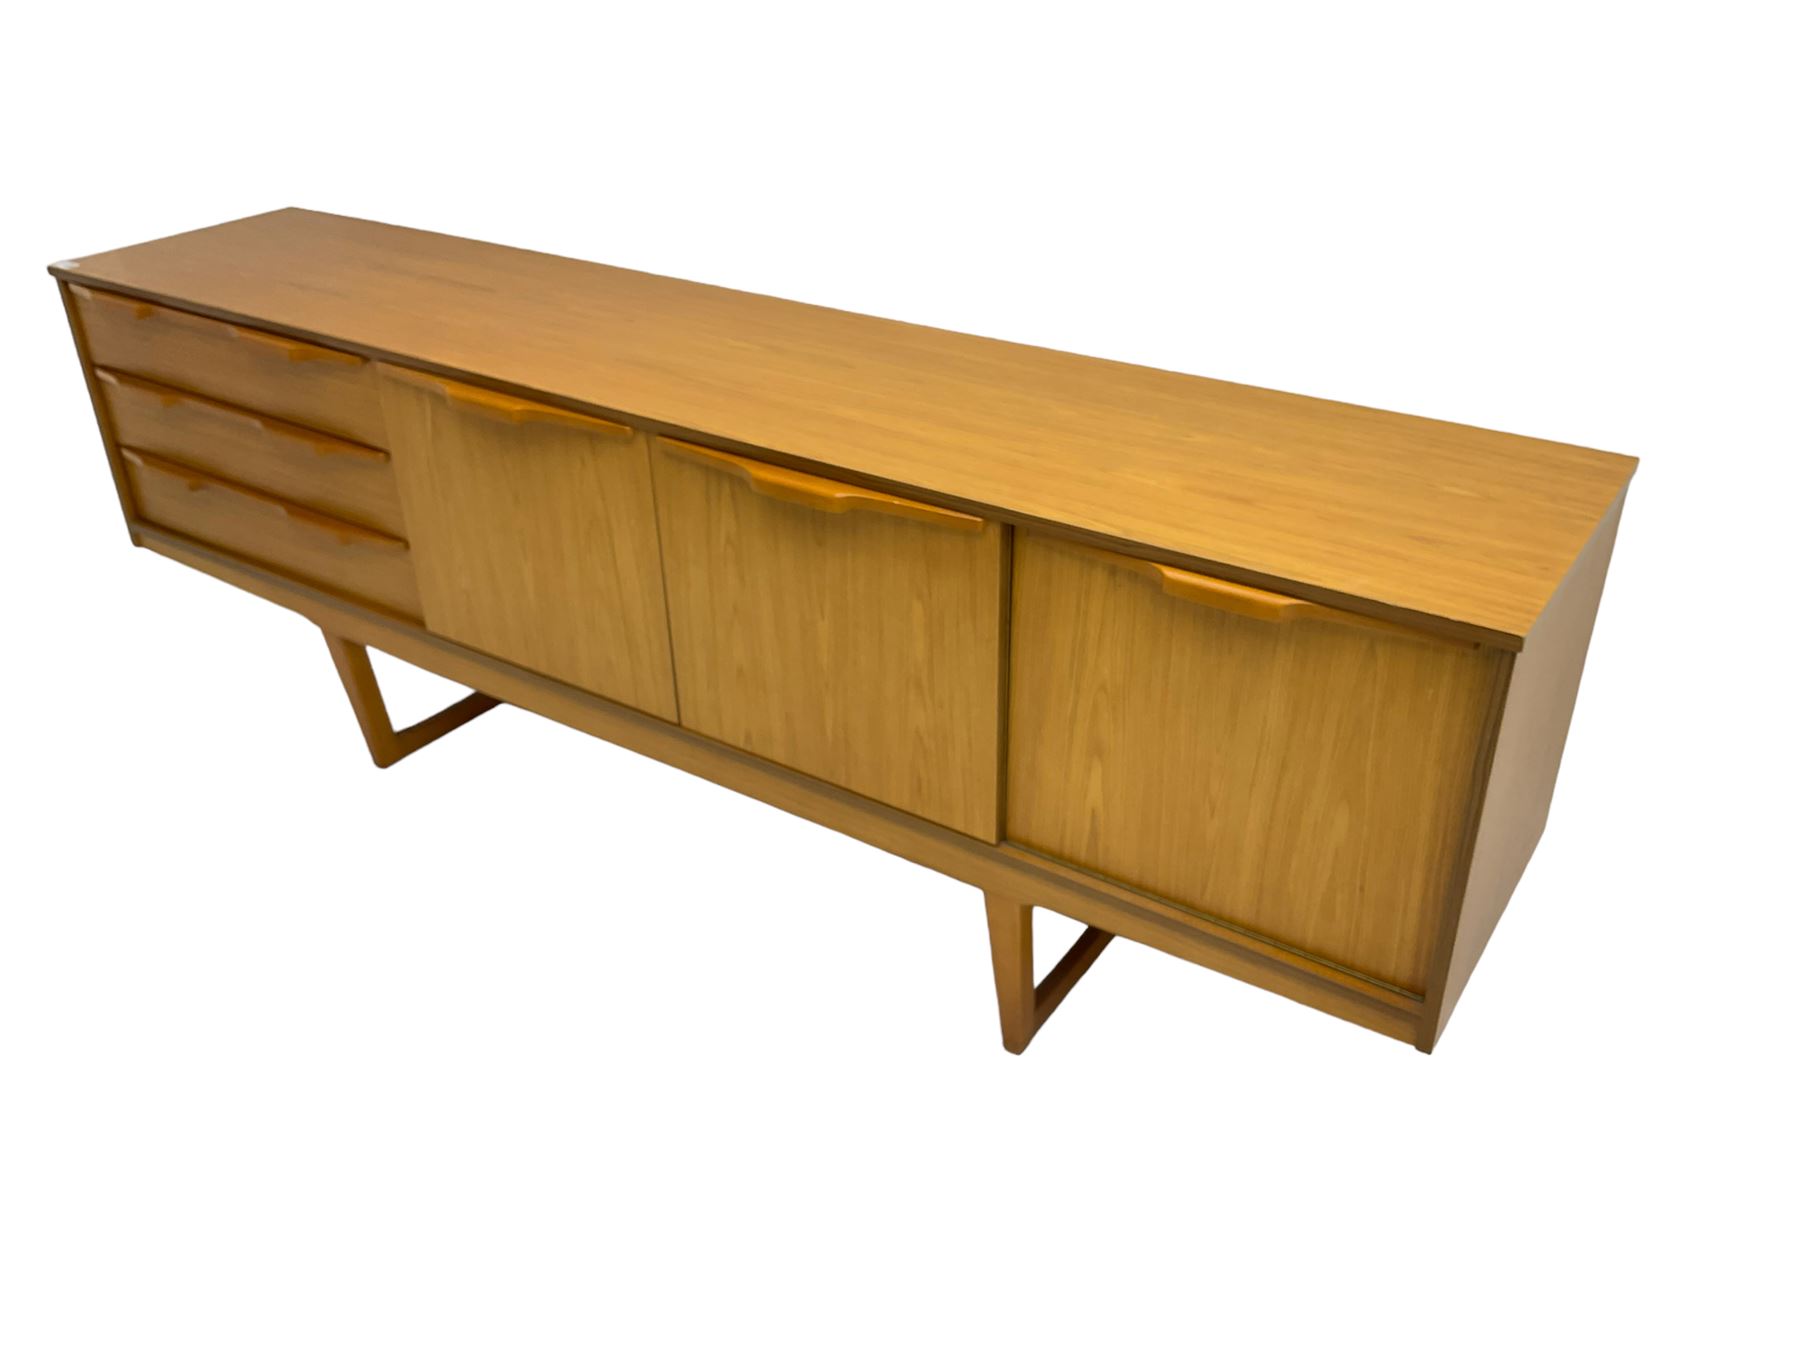 Stonehill Furniture (SF) Ltd - mid-20th century teak sideboard - Image 5 of 7